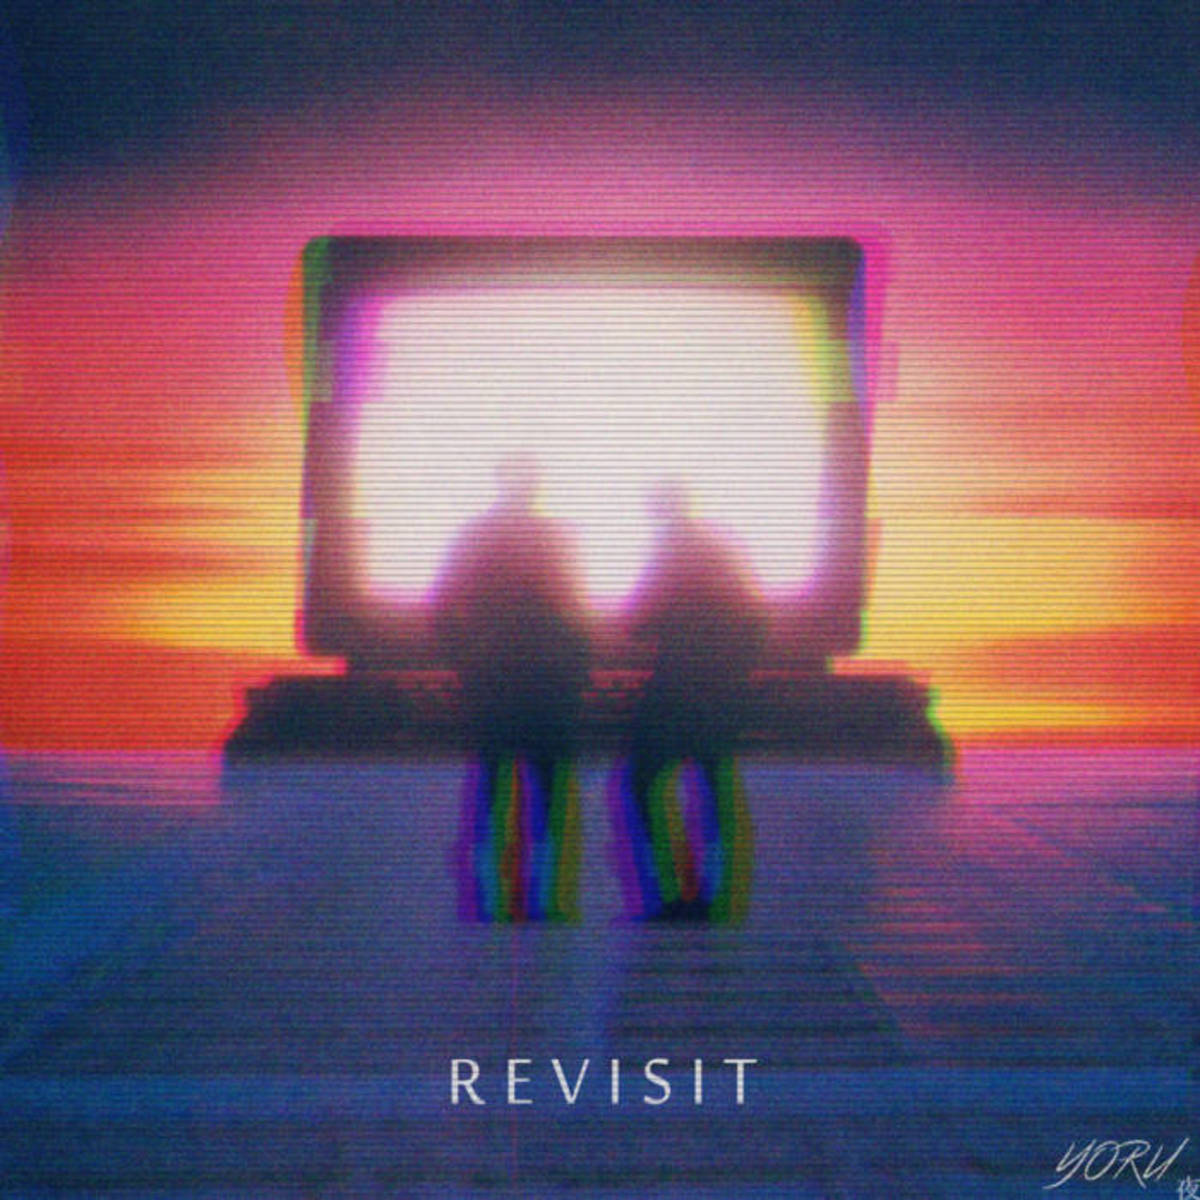 Album artwork for "Revisit," by YORU